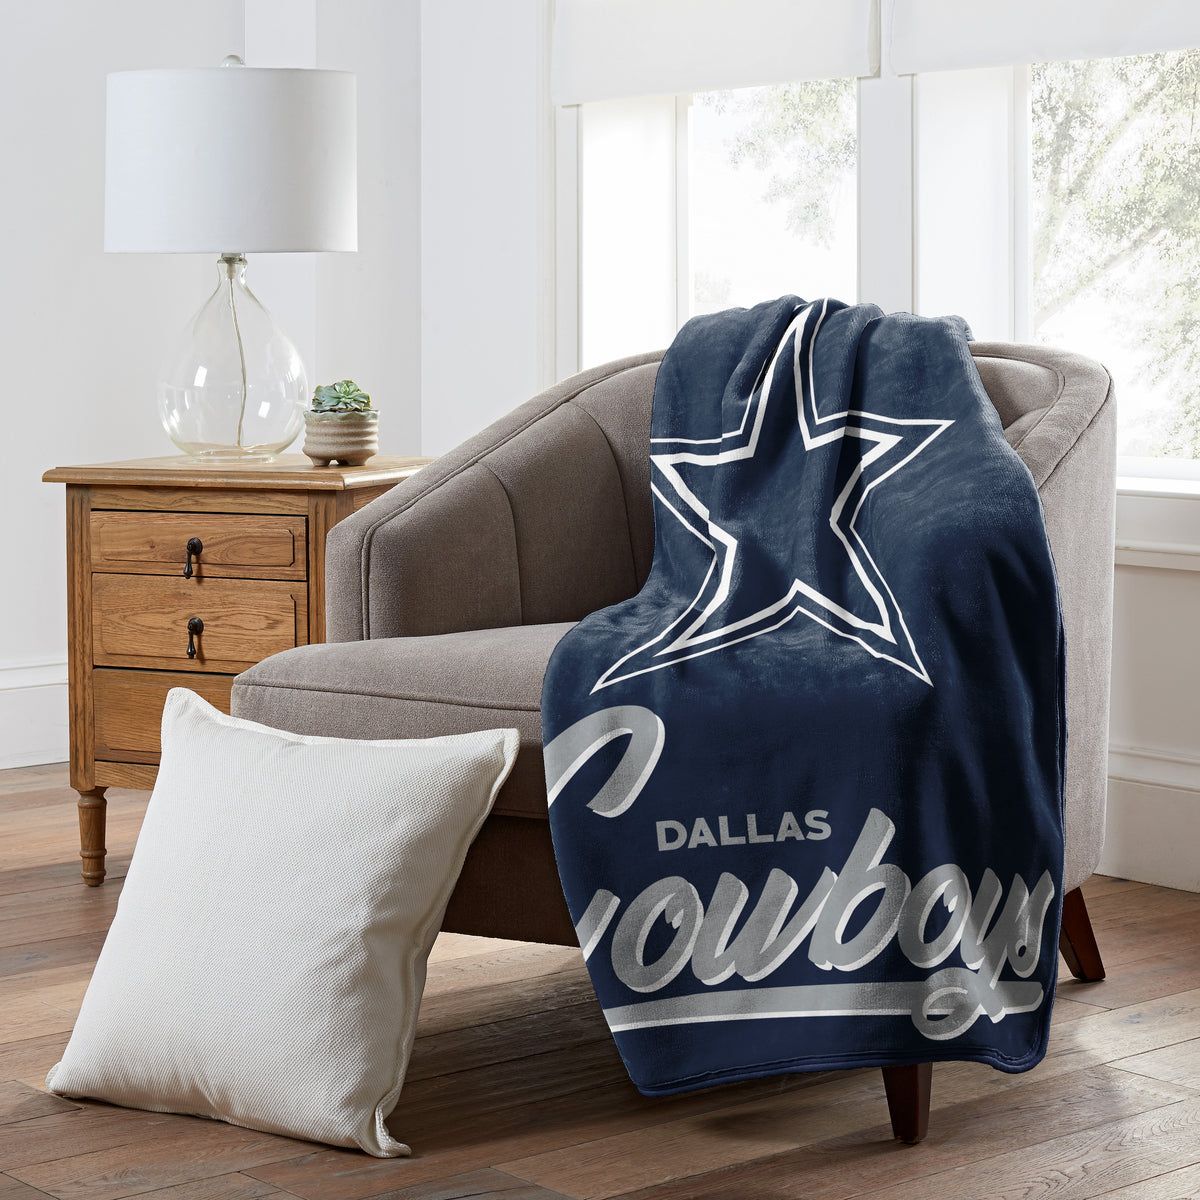 NFL Dallas Cowboys Northwest Signature Raschel Blanket